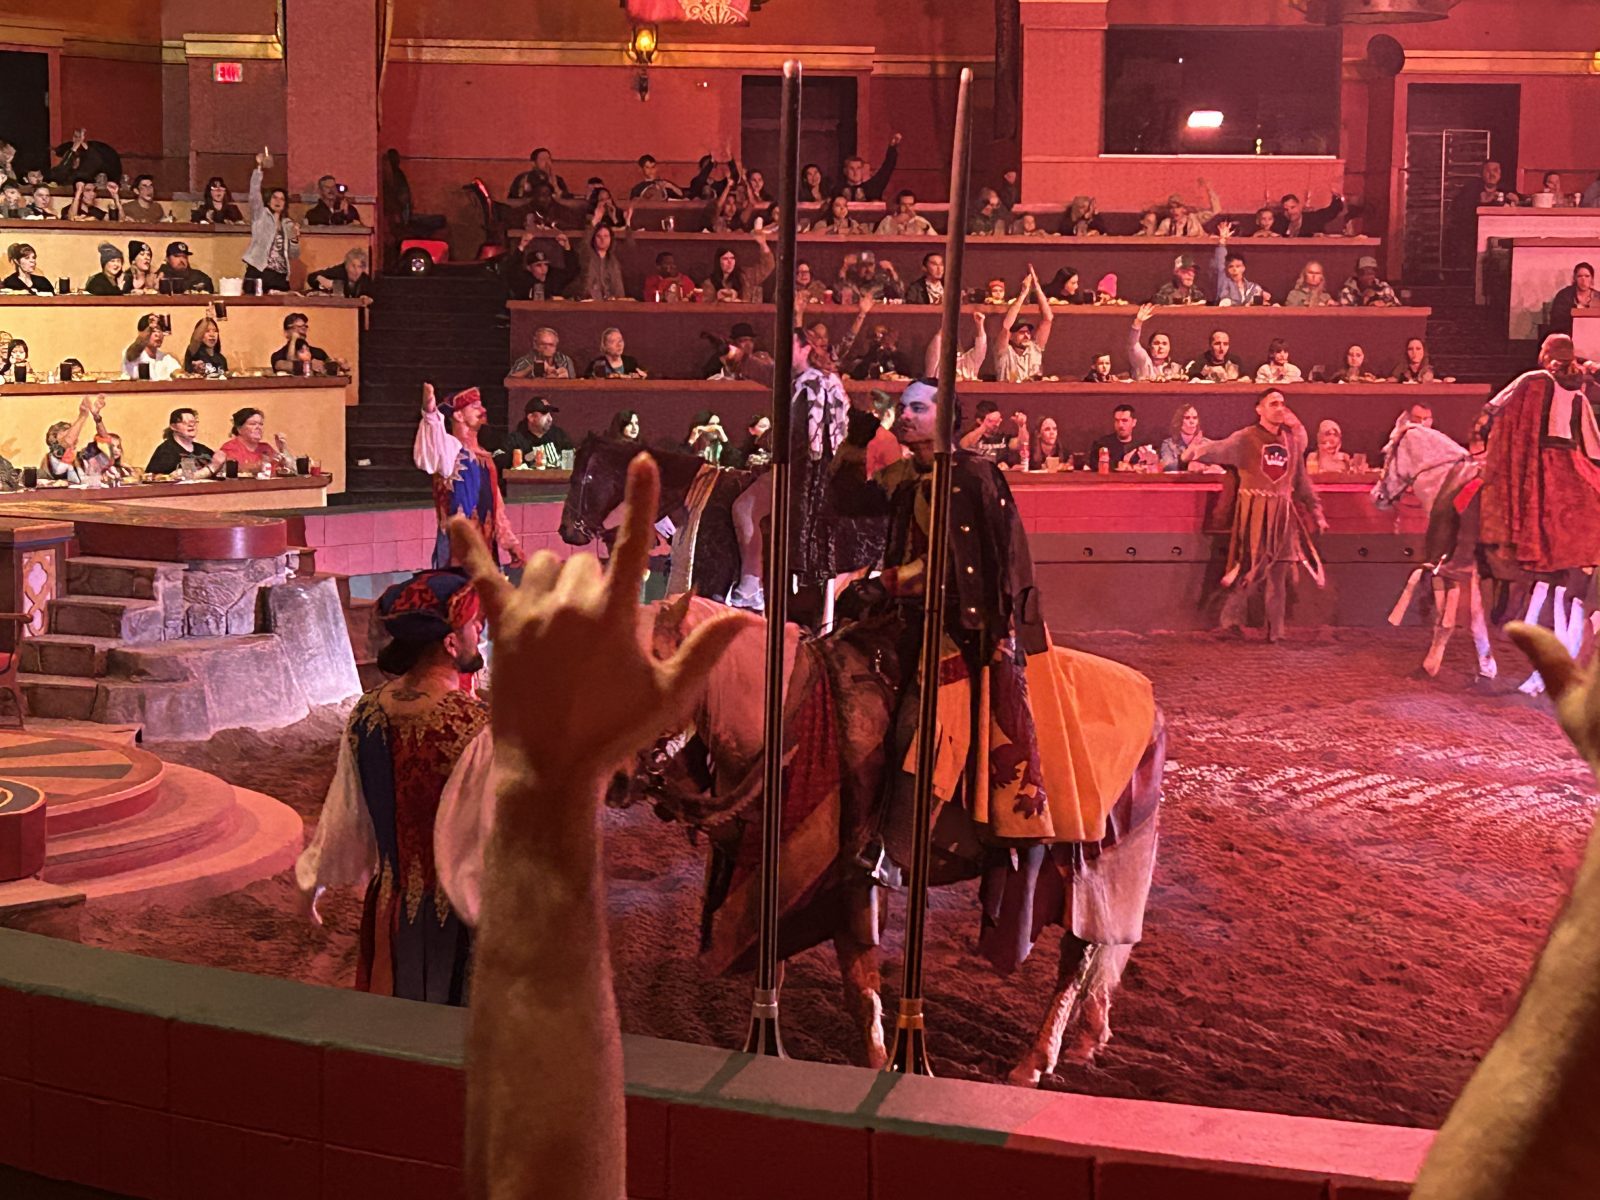 PHOTOS: 'Tournament of Kings' dinner show at Excalibur Las Vegas – Part Two  – AmericaJR